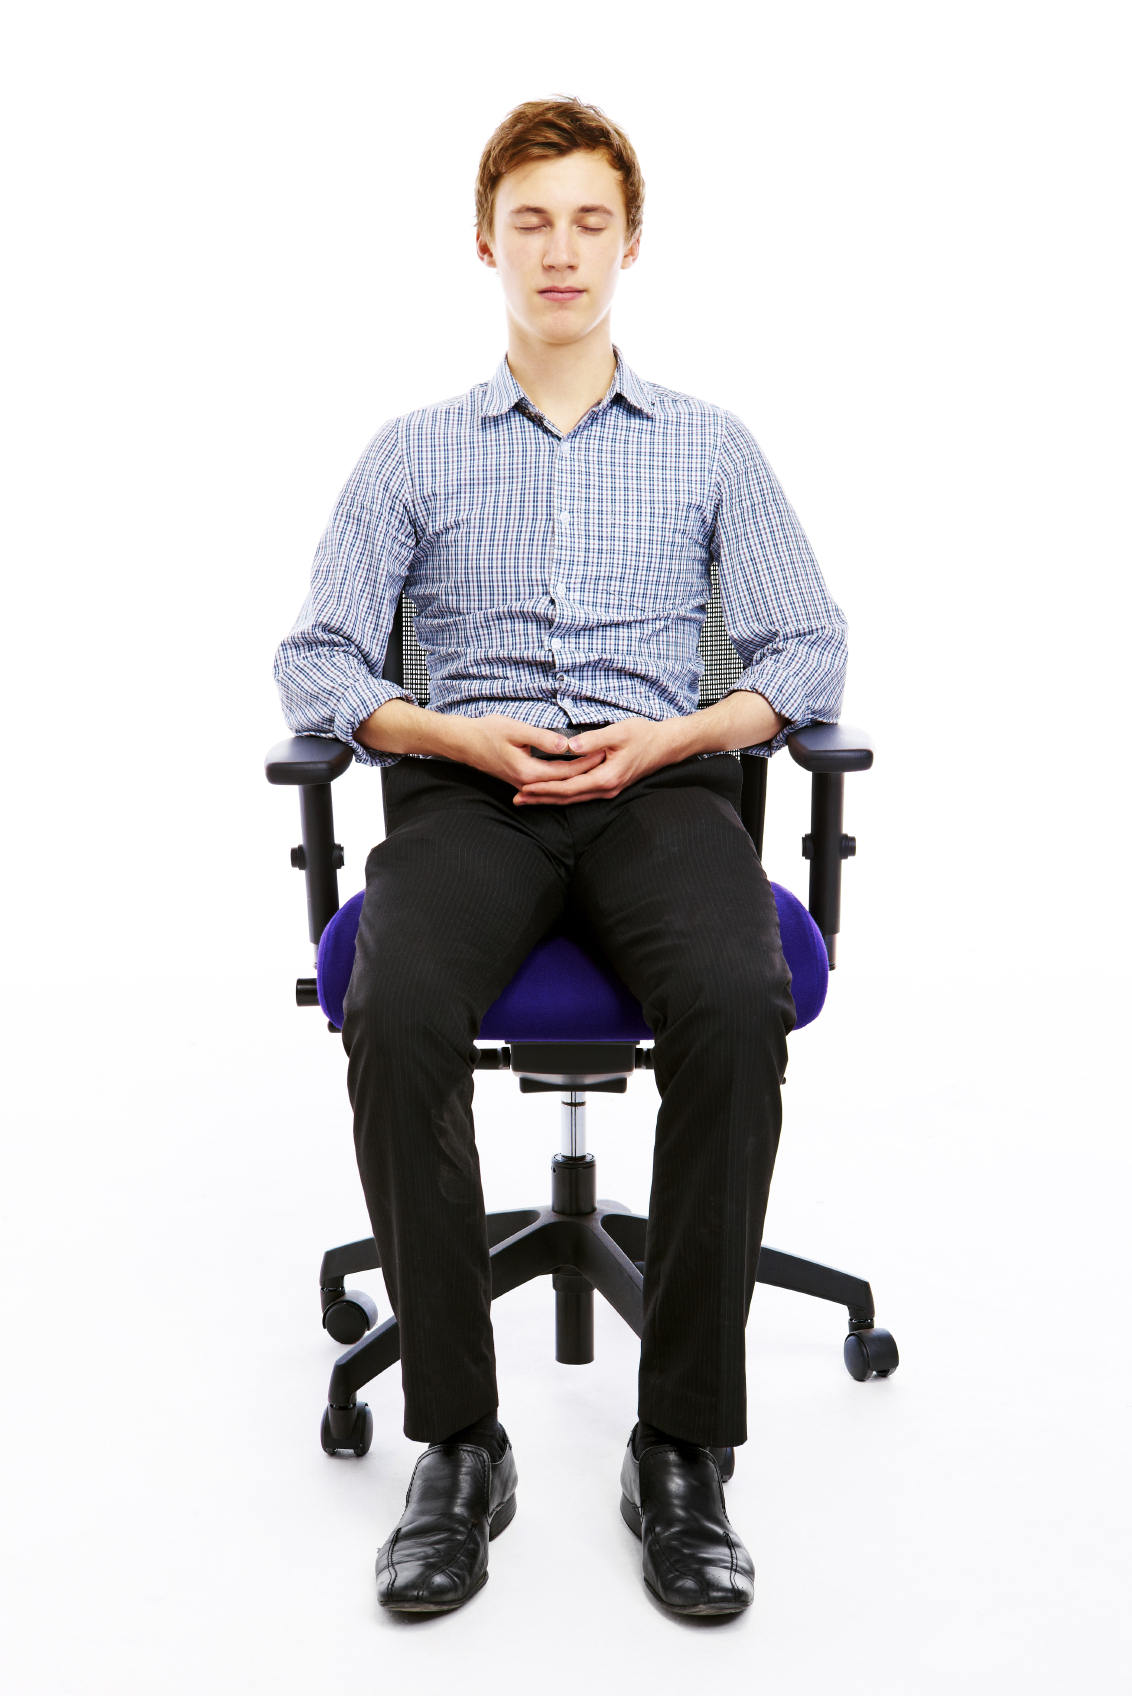 Meditation on Chair - developingmoneyideas.com